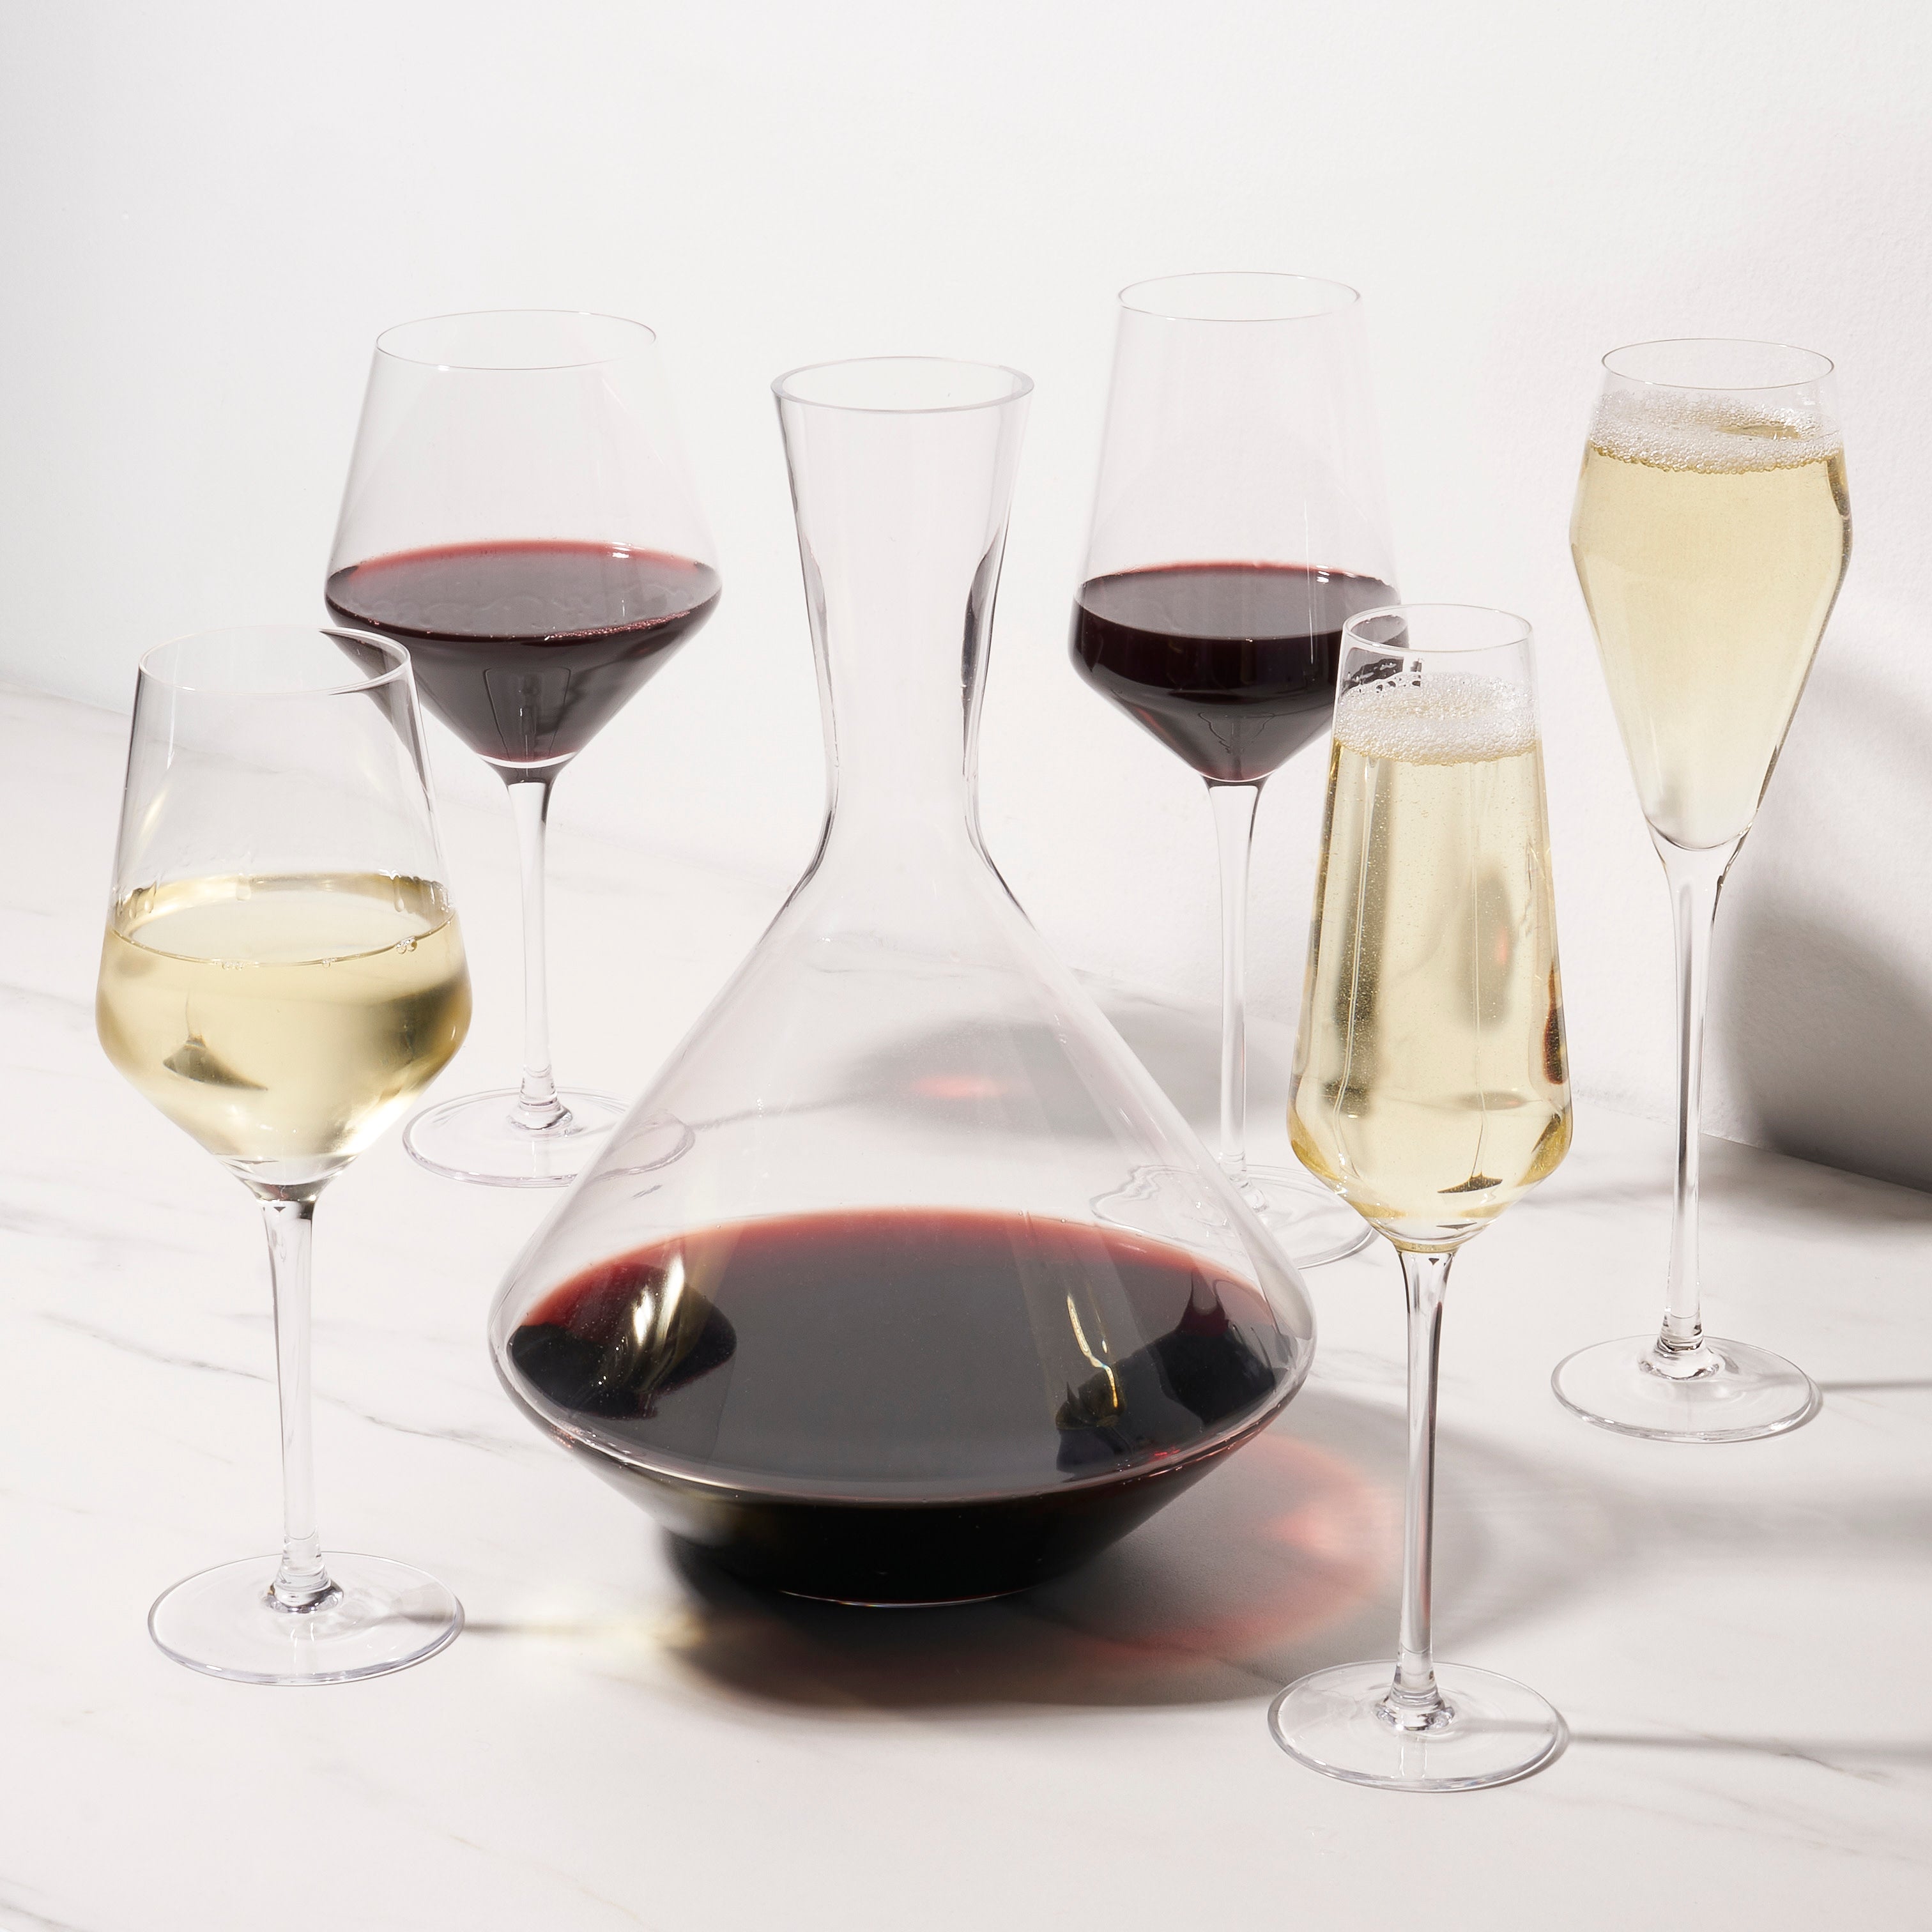 Classic Crystal Glass Stemware High Quality Stock Glass Wine